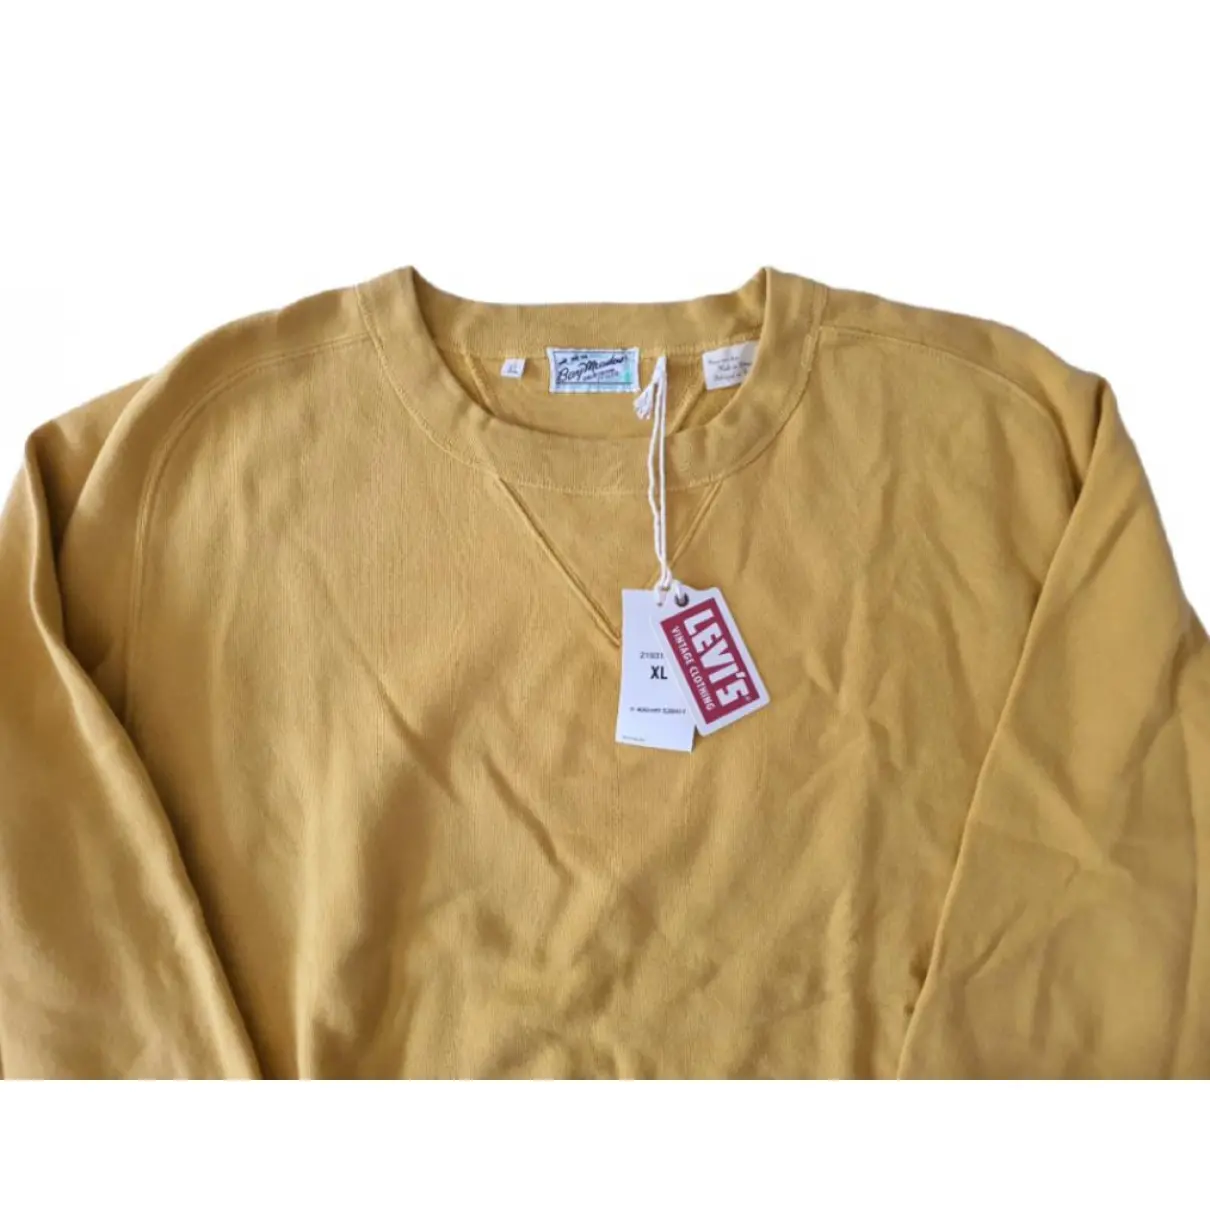 Buy Levi's Vintage Clothing Sweatshirt online